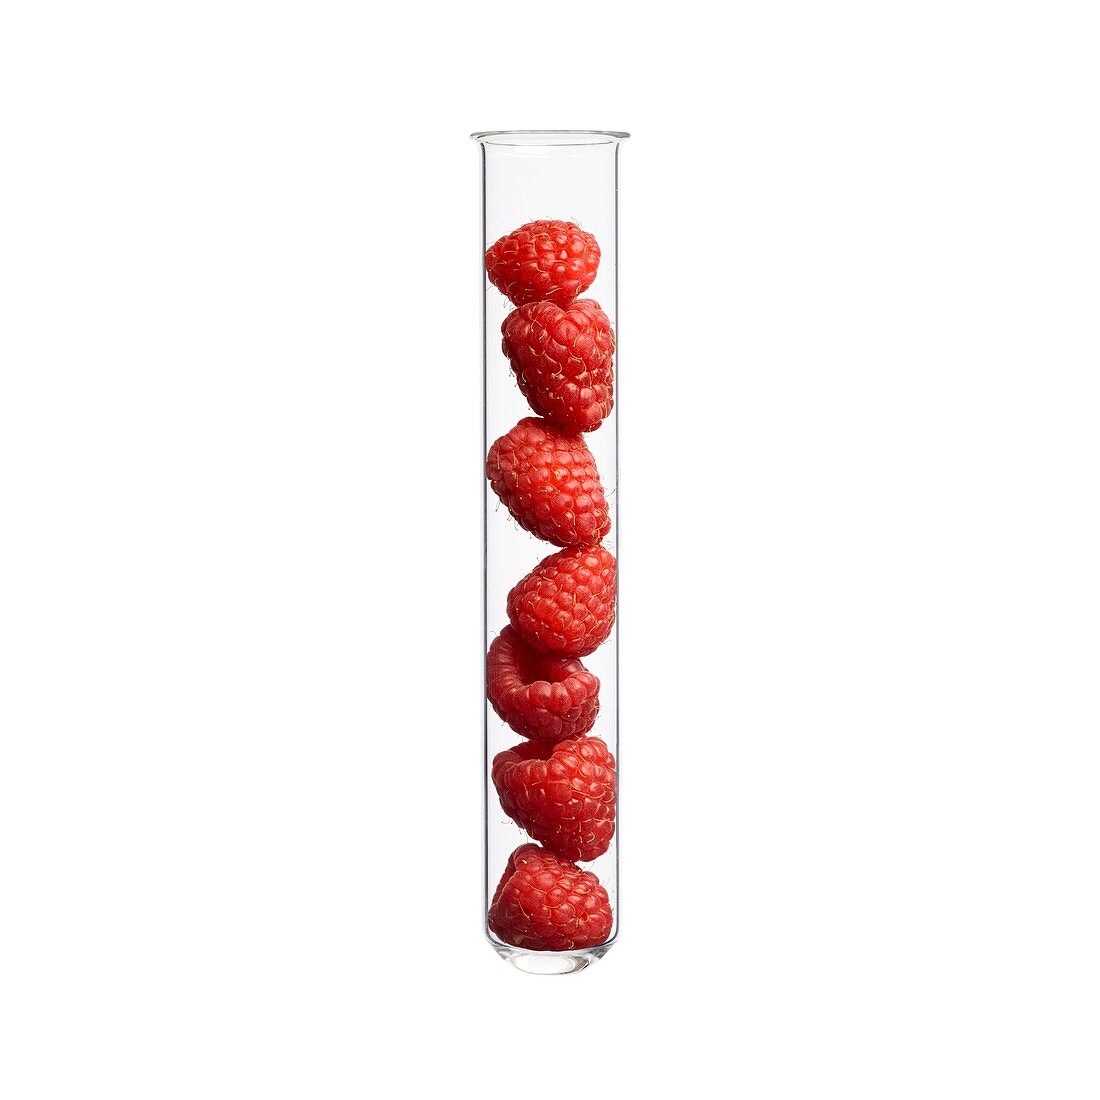 Raspberries in test tube